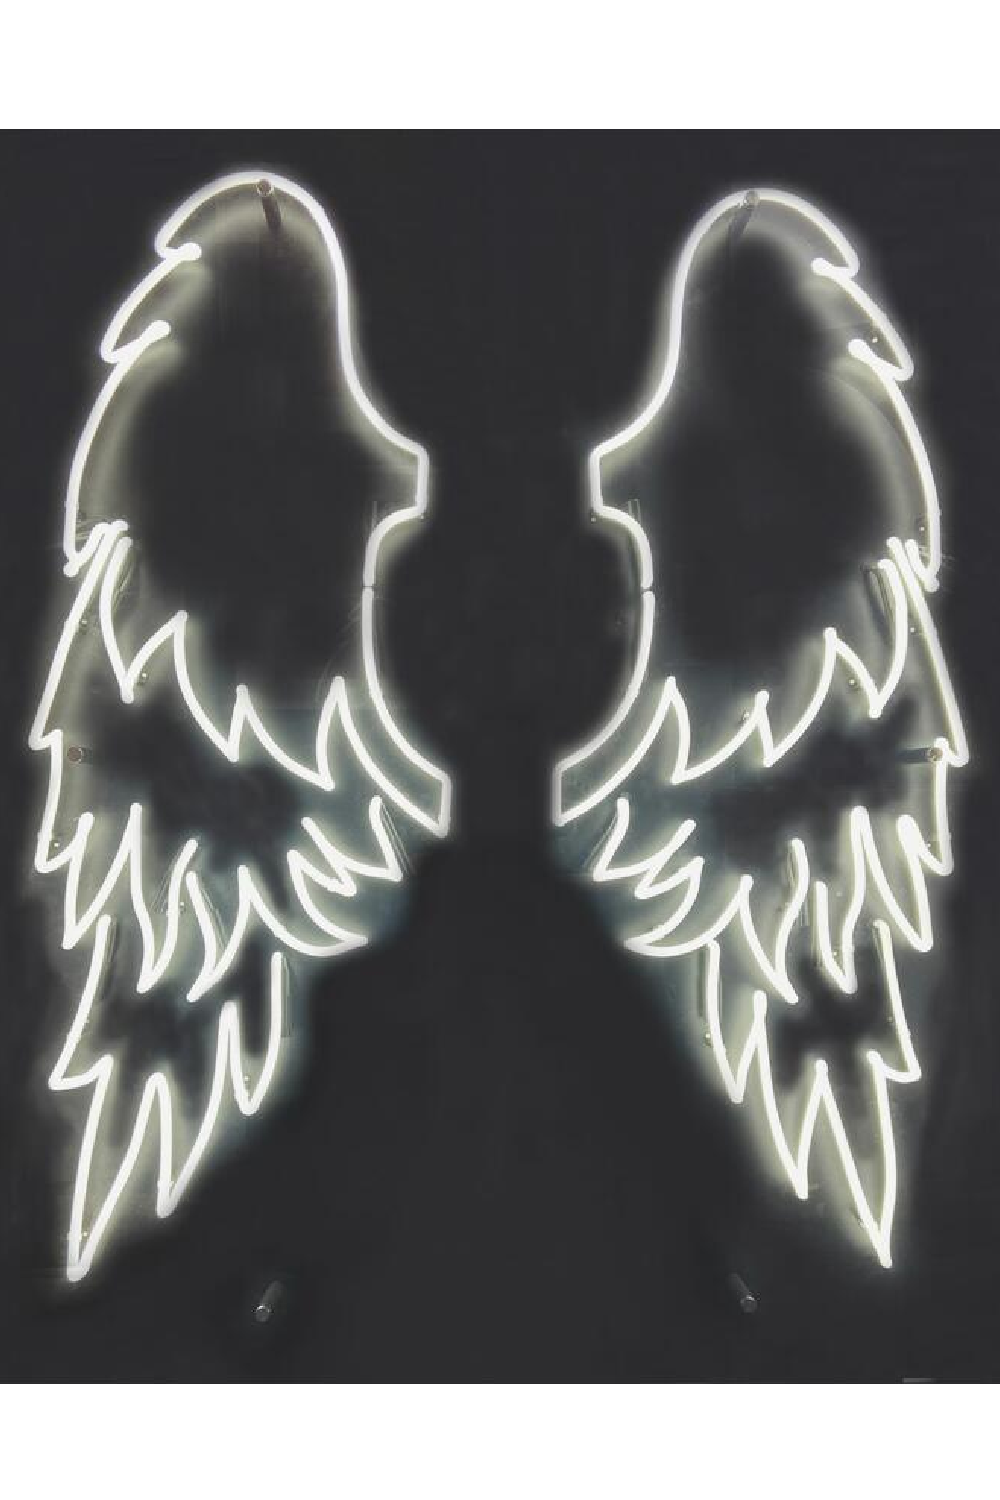 3D White Wings Neon Artwork | Andrew Martin My Angel | OROA